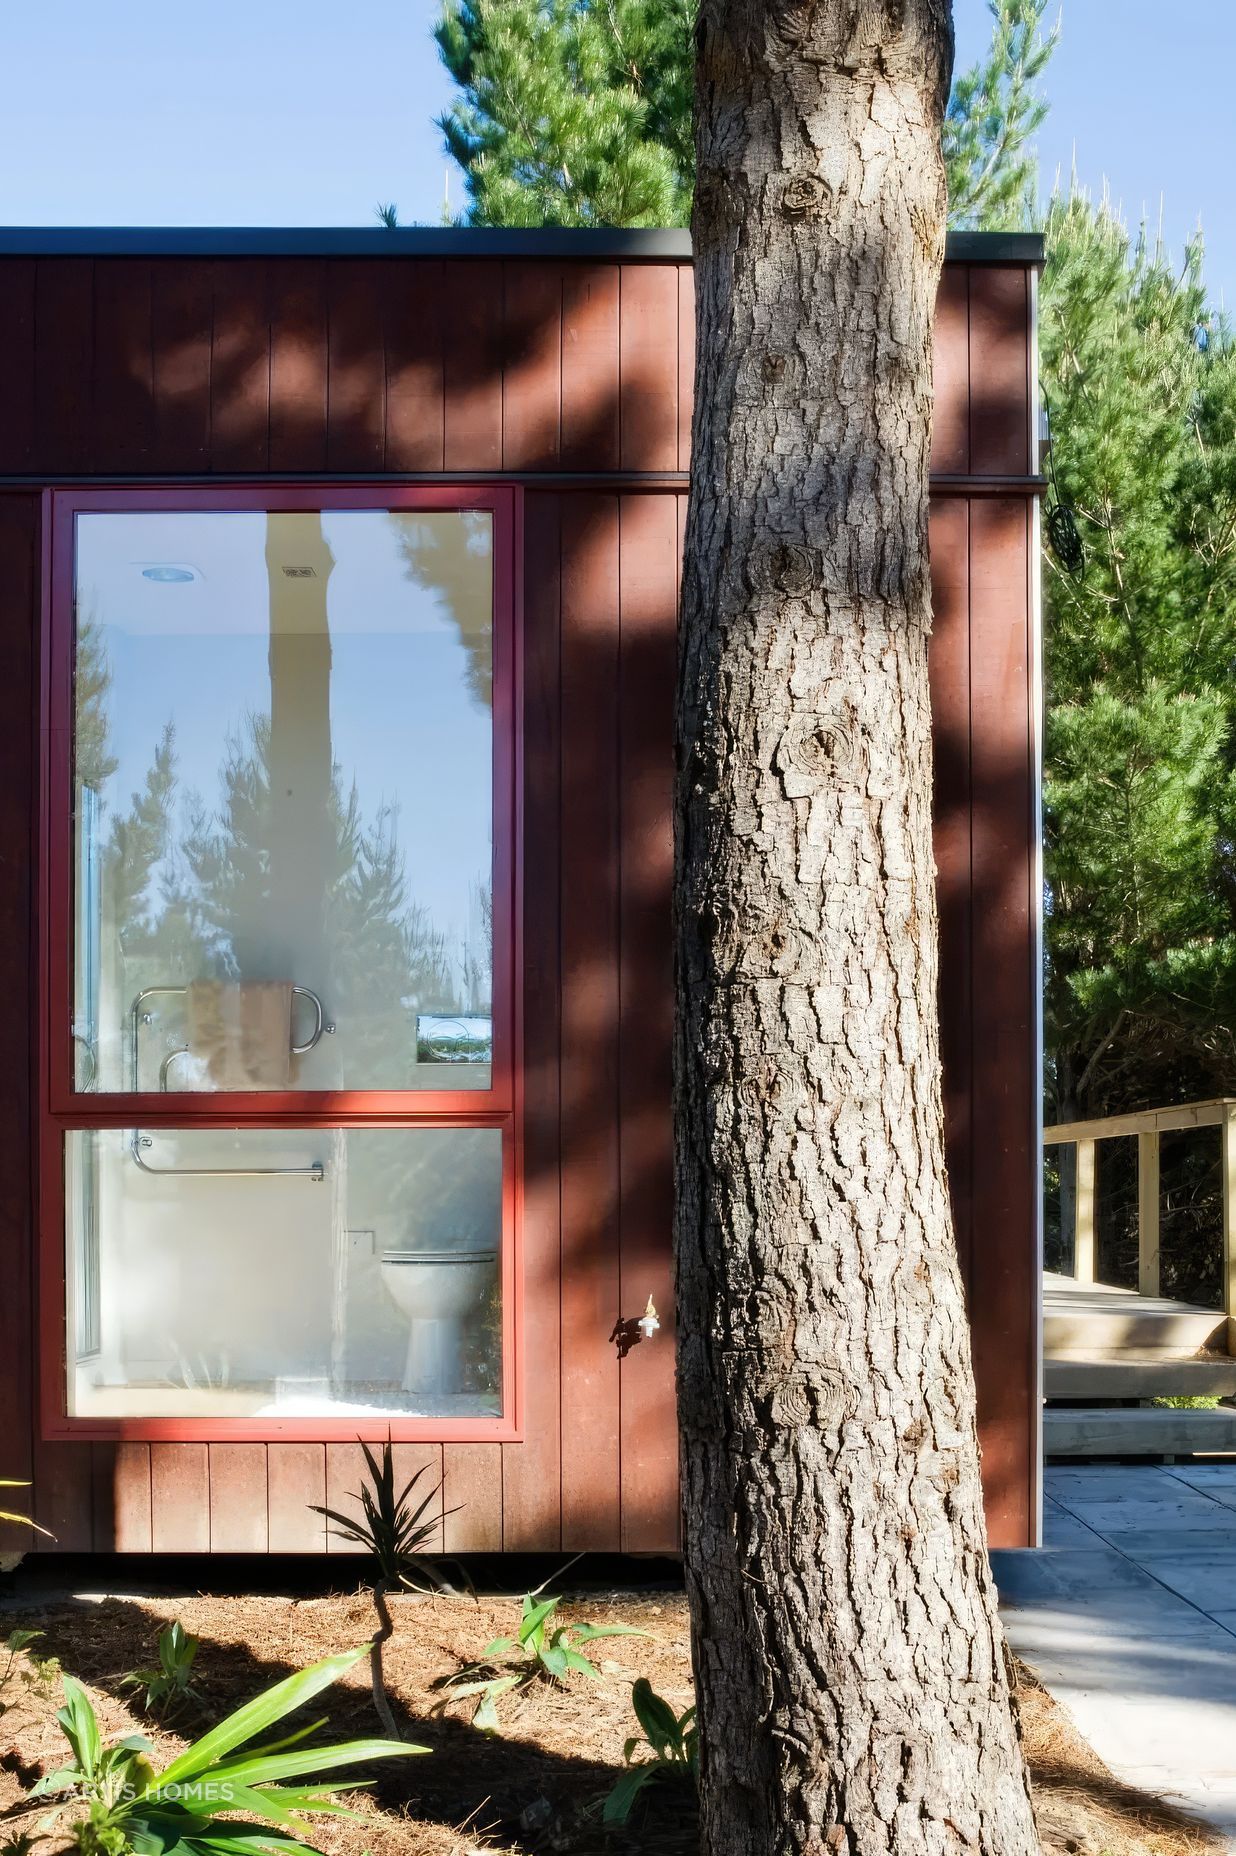 jone-tree-exterior-artis-home-gigapixel-standard-scale-200x.jpeg